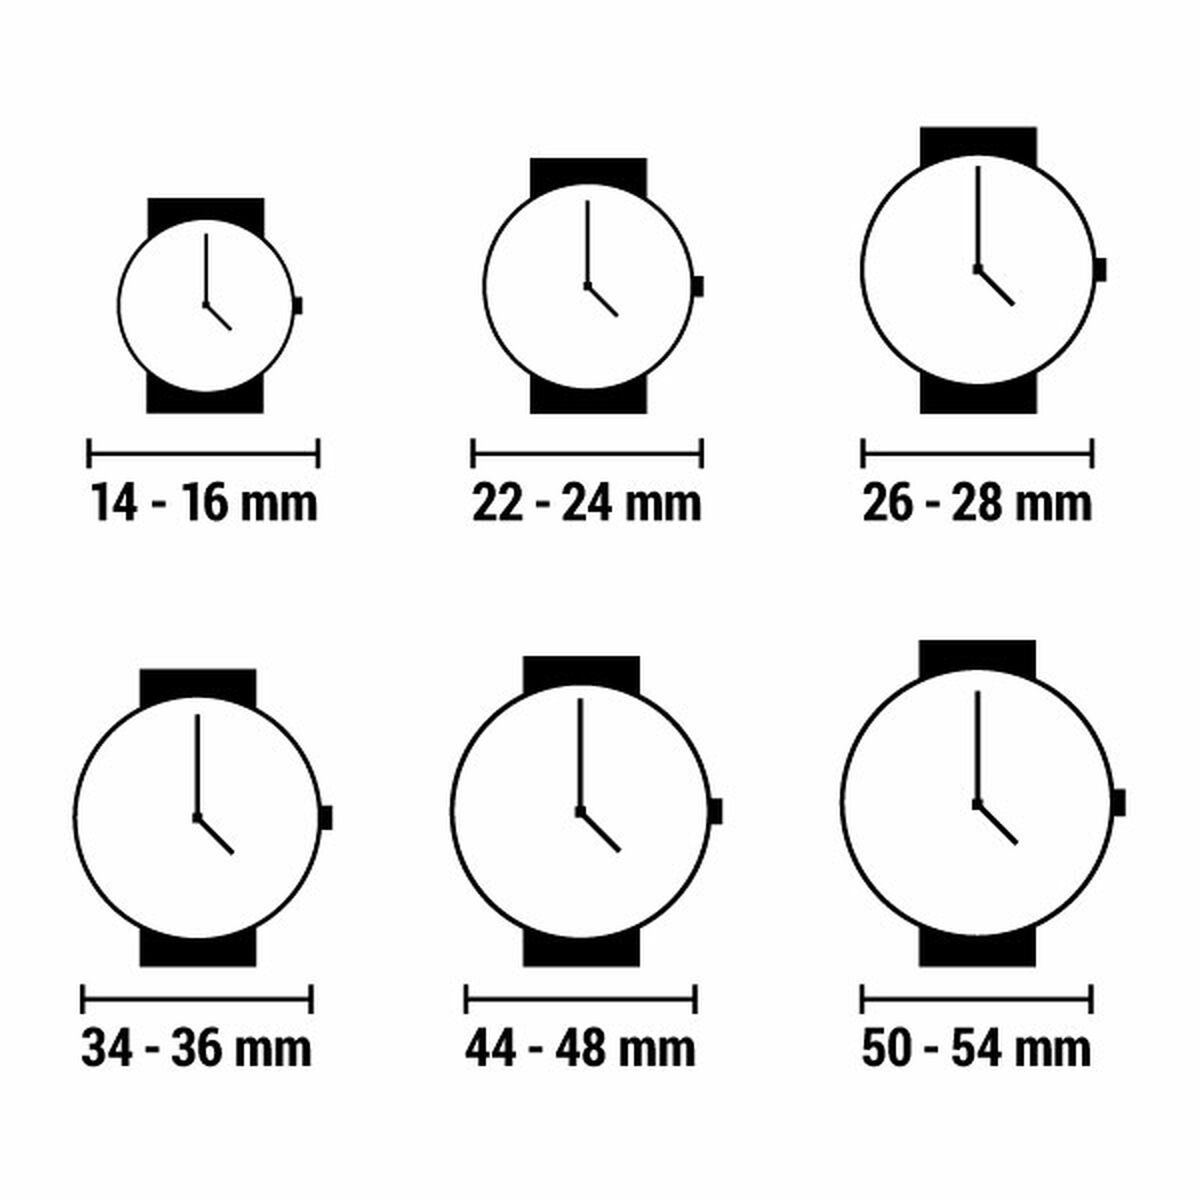 Horloge Dames Juicy Couture (Ø 28 mm)